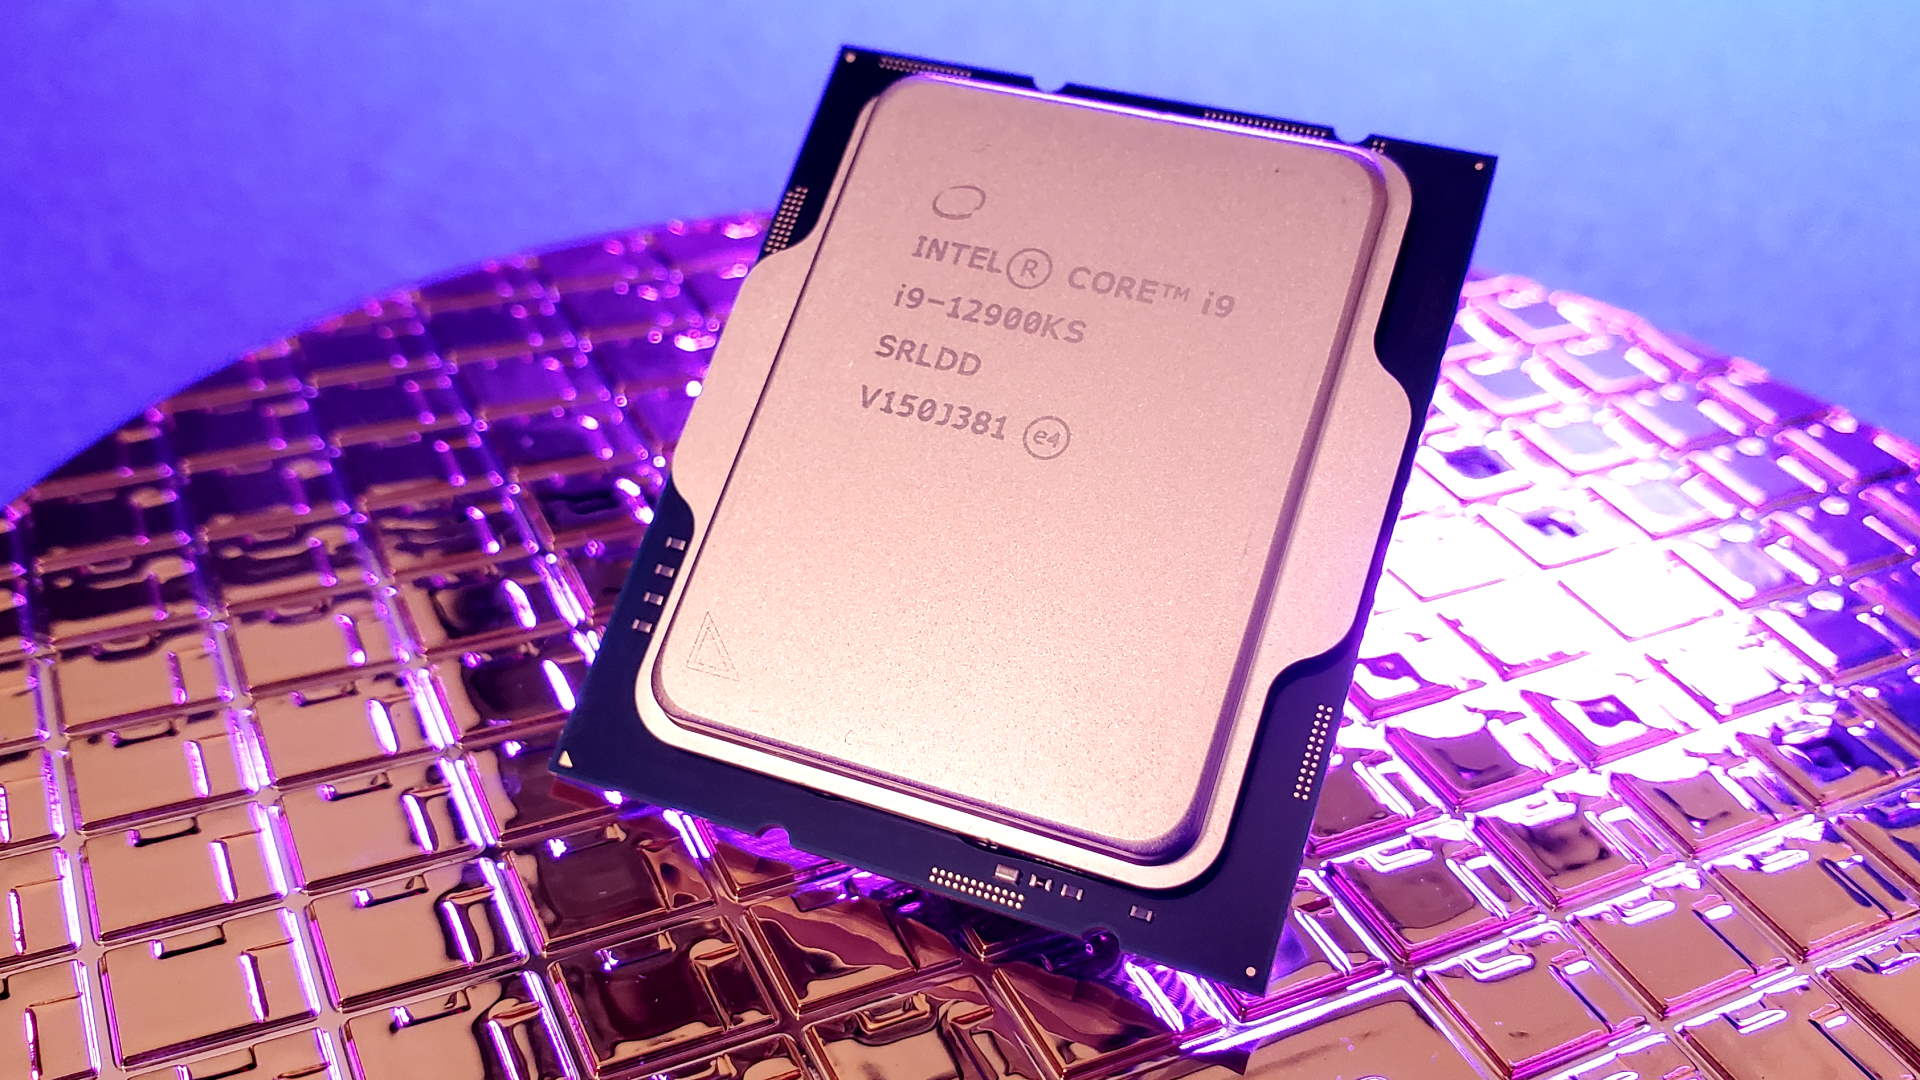 Core i9-12900KS Review: Intel's Fastest Alder Lake CPU Tested